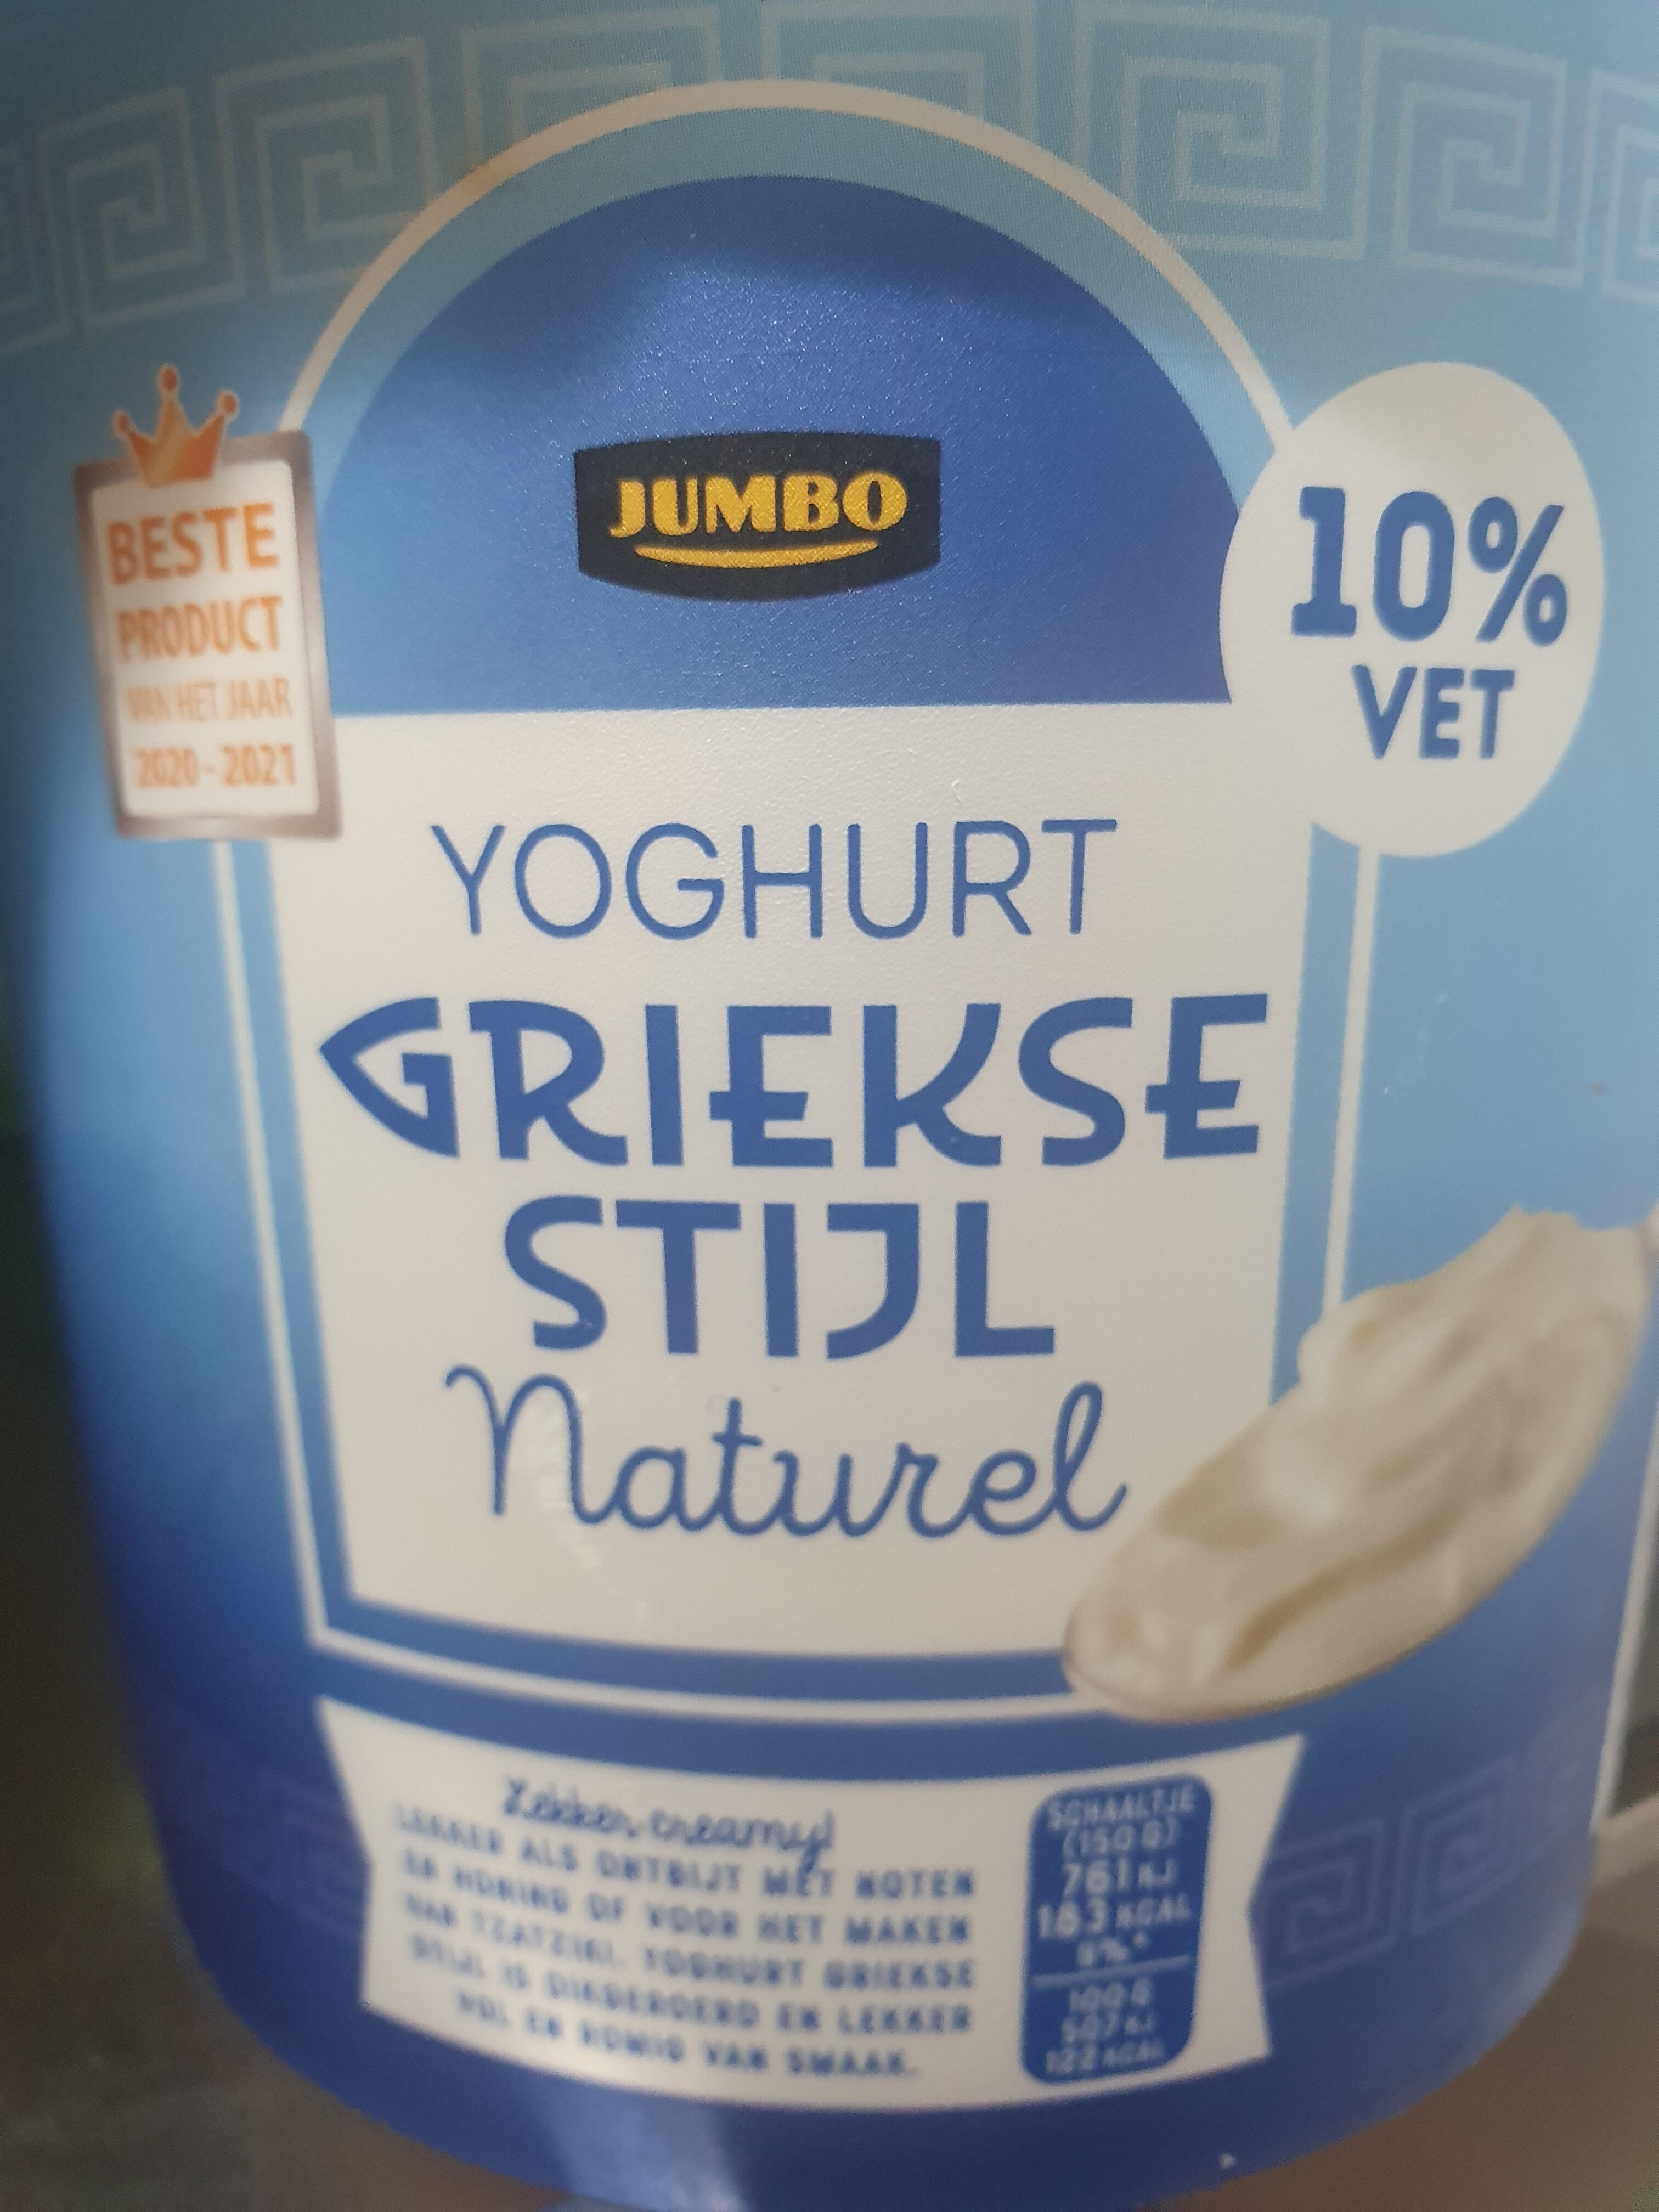 griekse yoghurt - Product